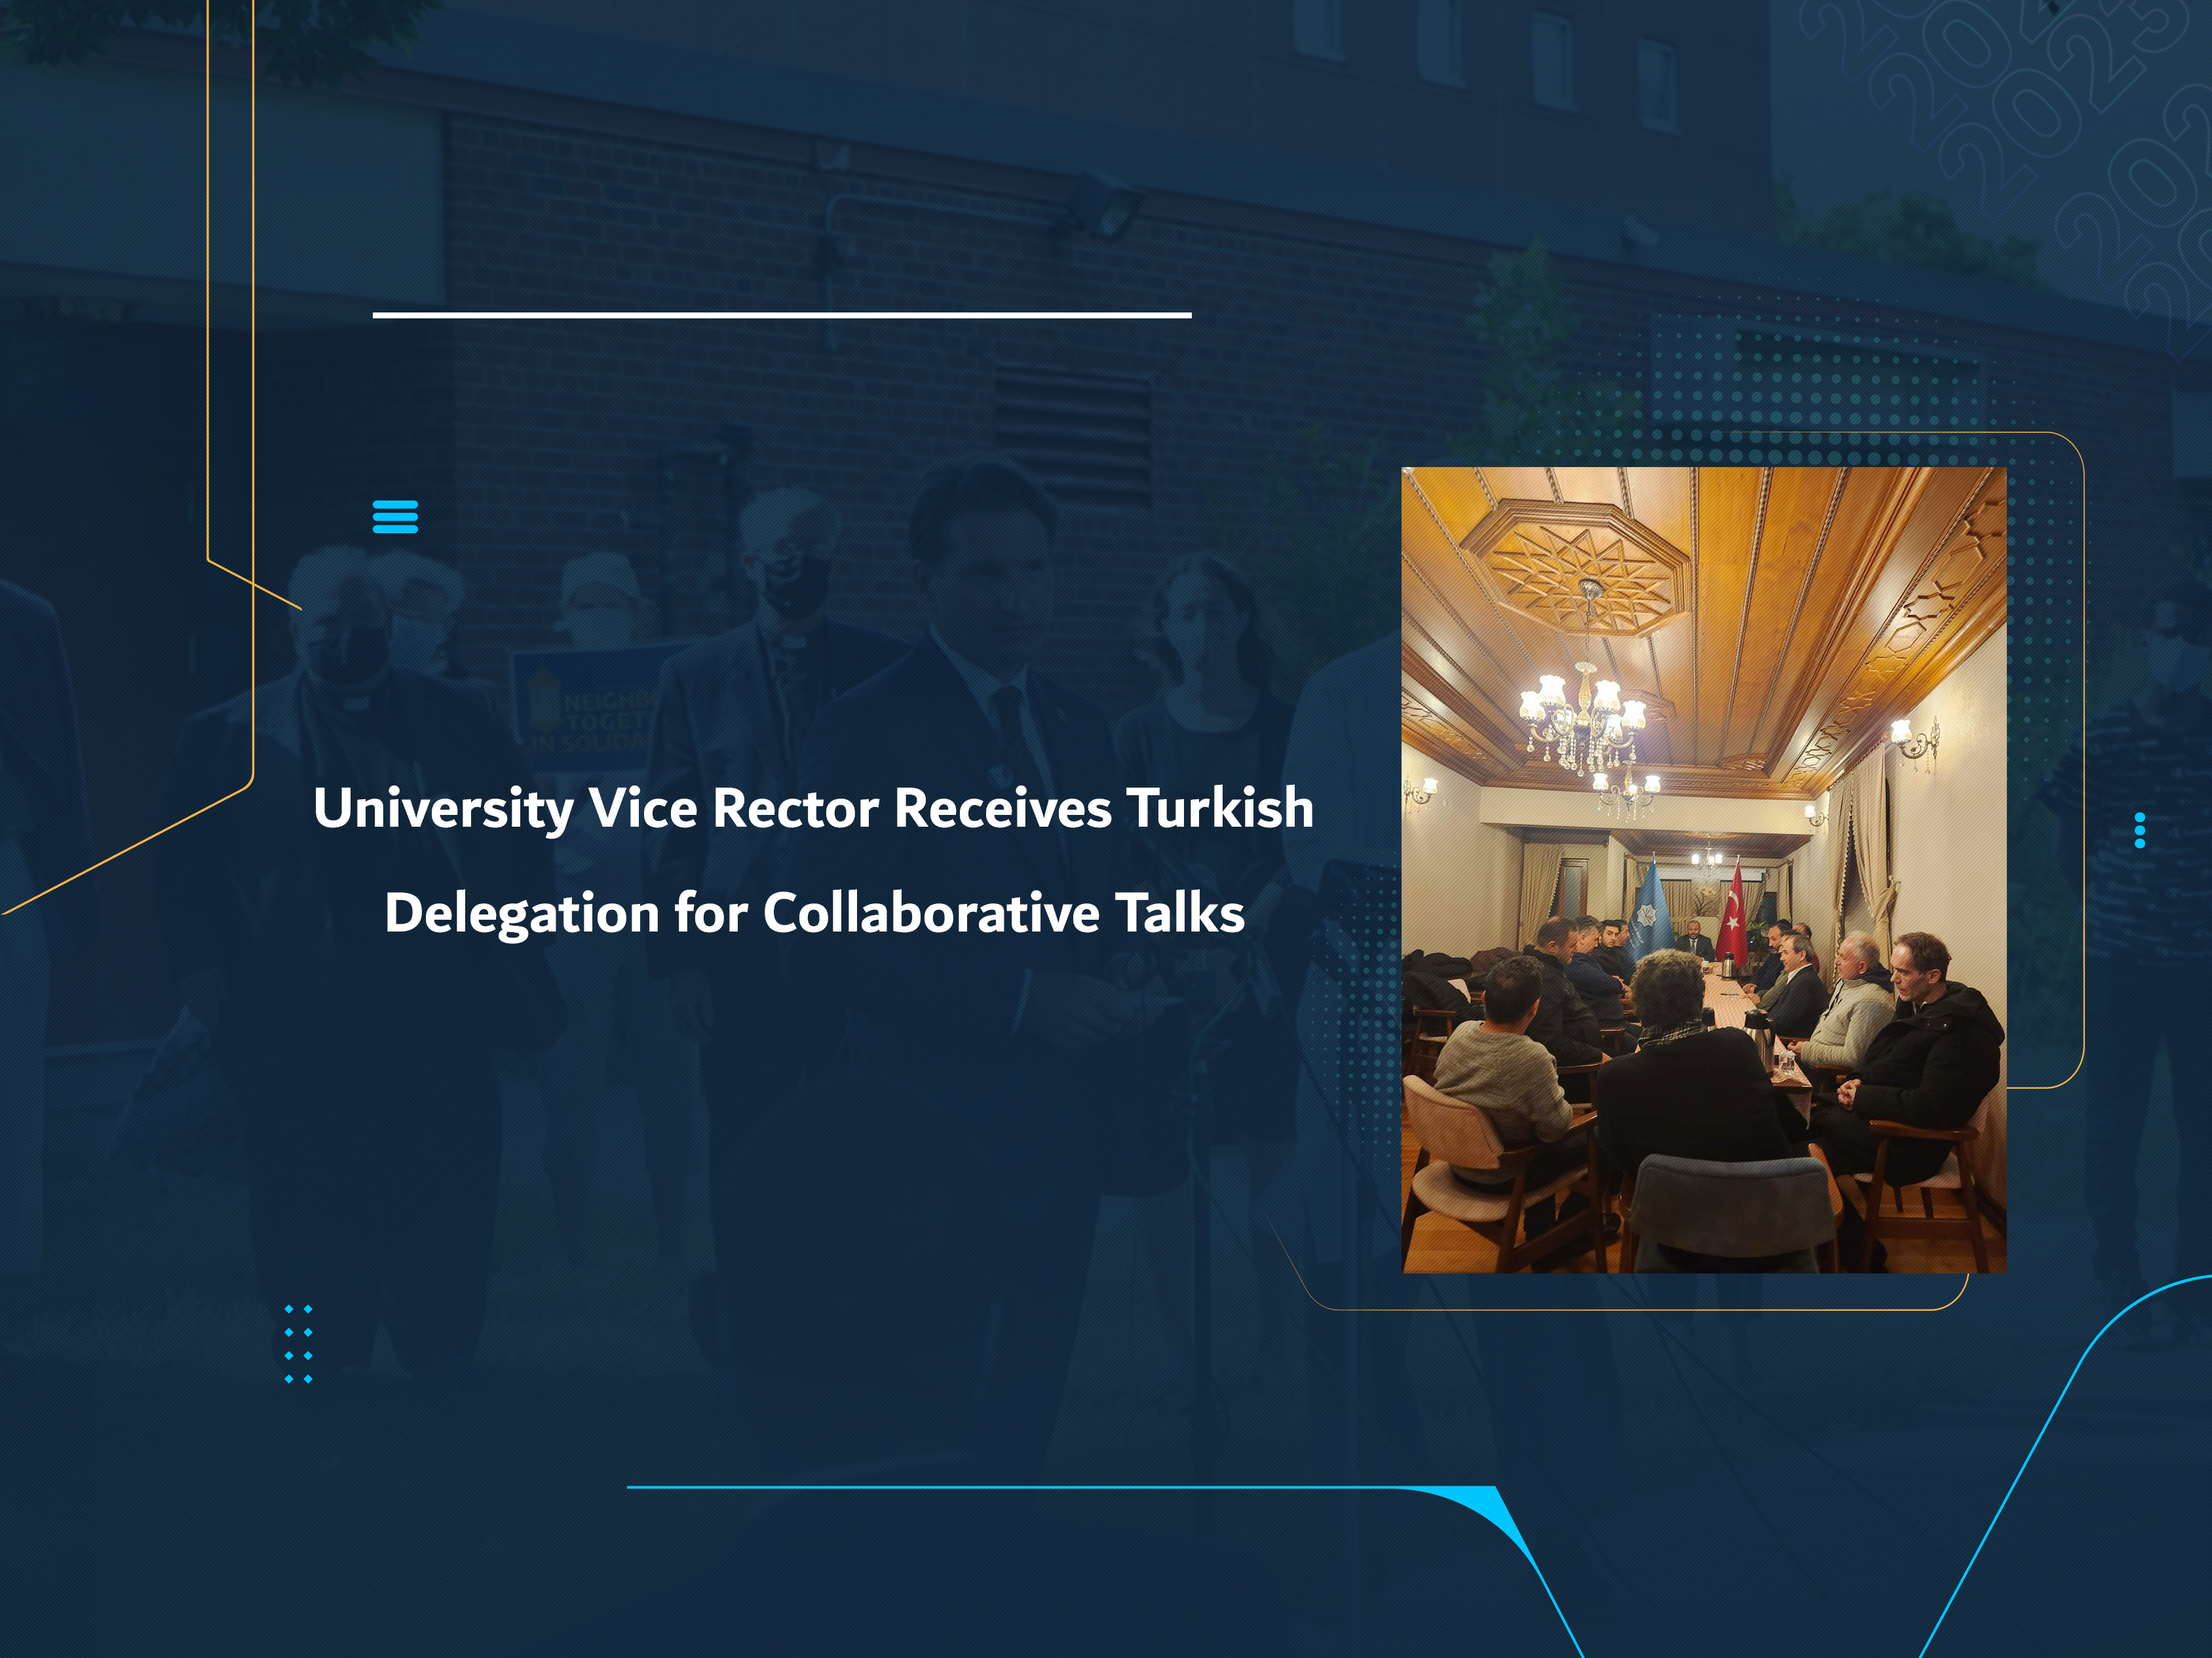 University Vice Rector Receives Turkish Delegation for Collaborative Talks